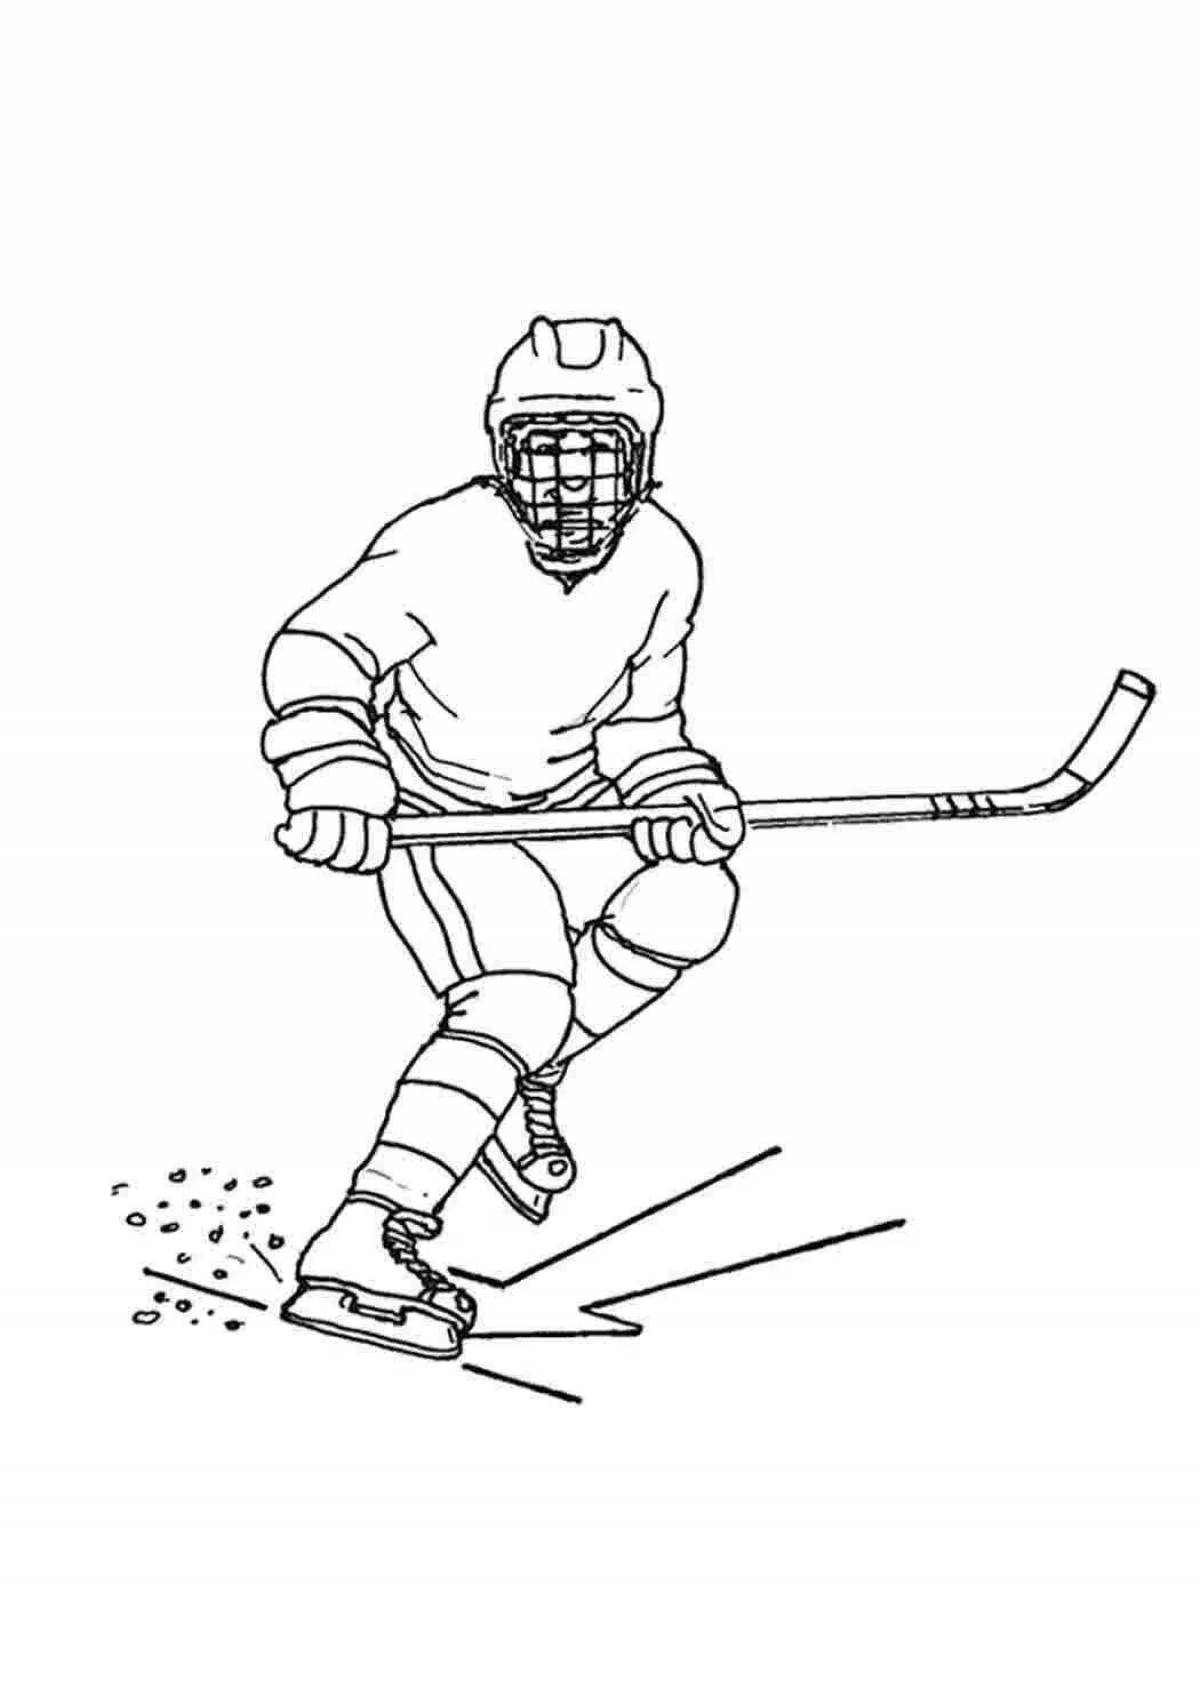 Joyful hockey coloring book for boys